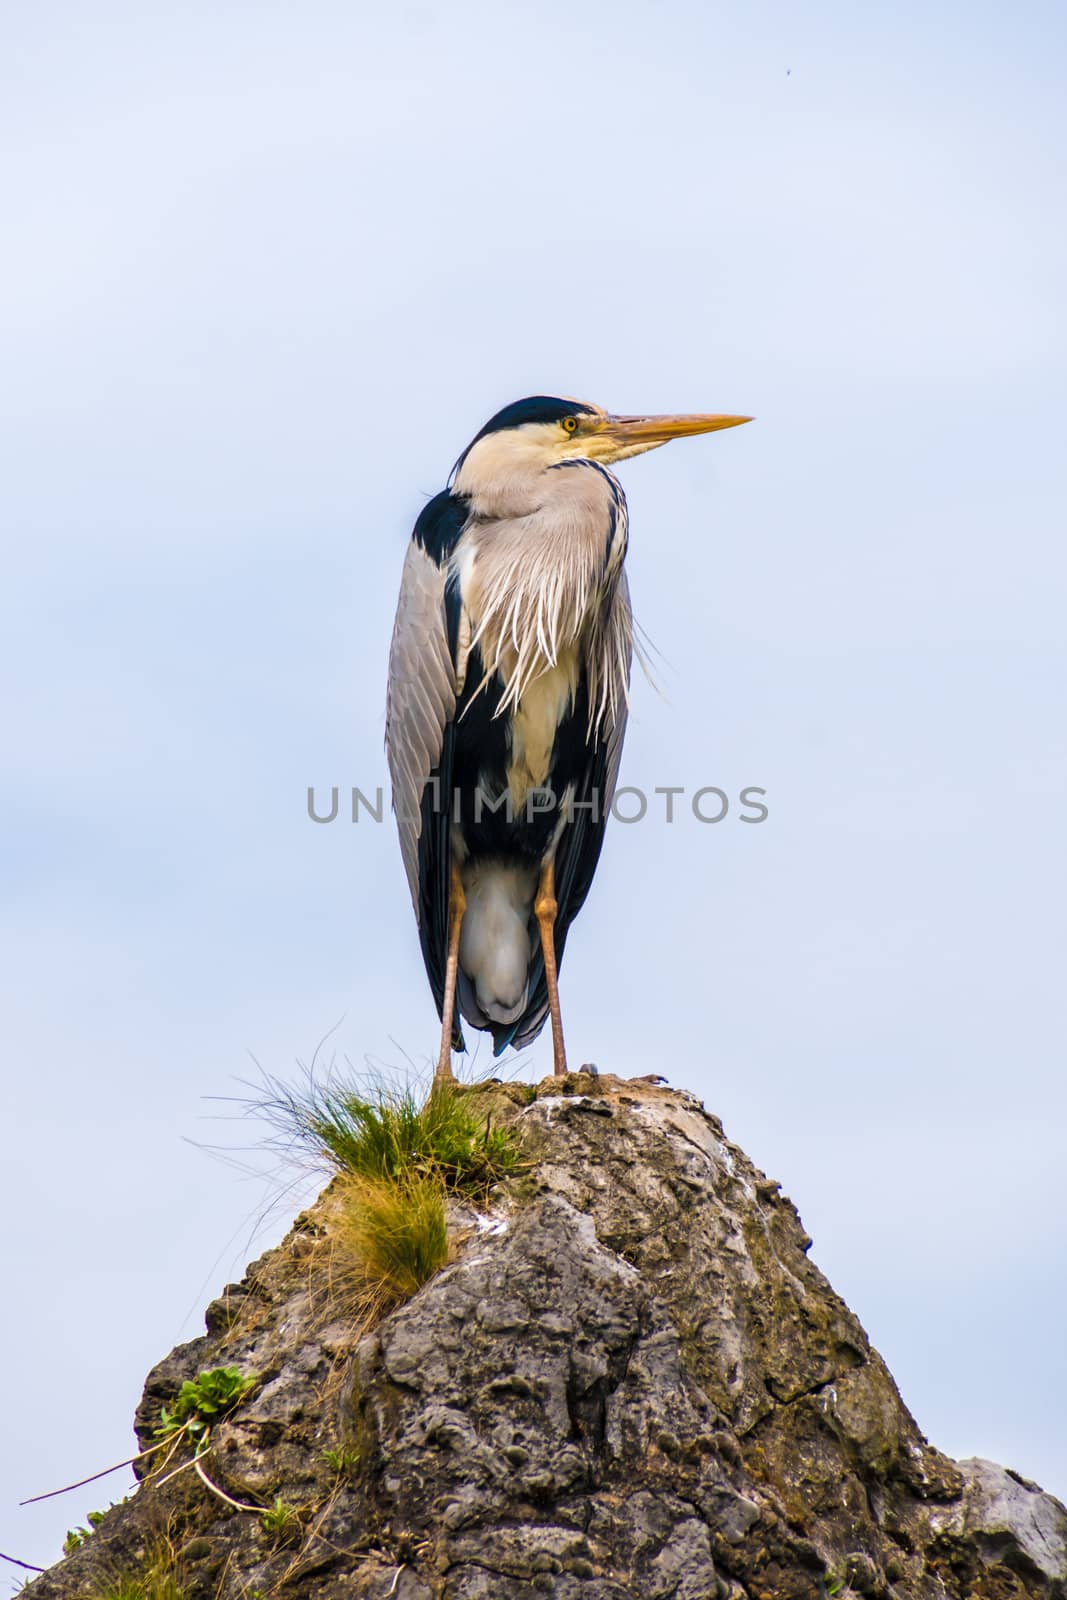 Common crane bird standing on a rock